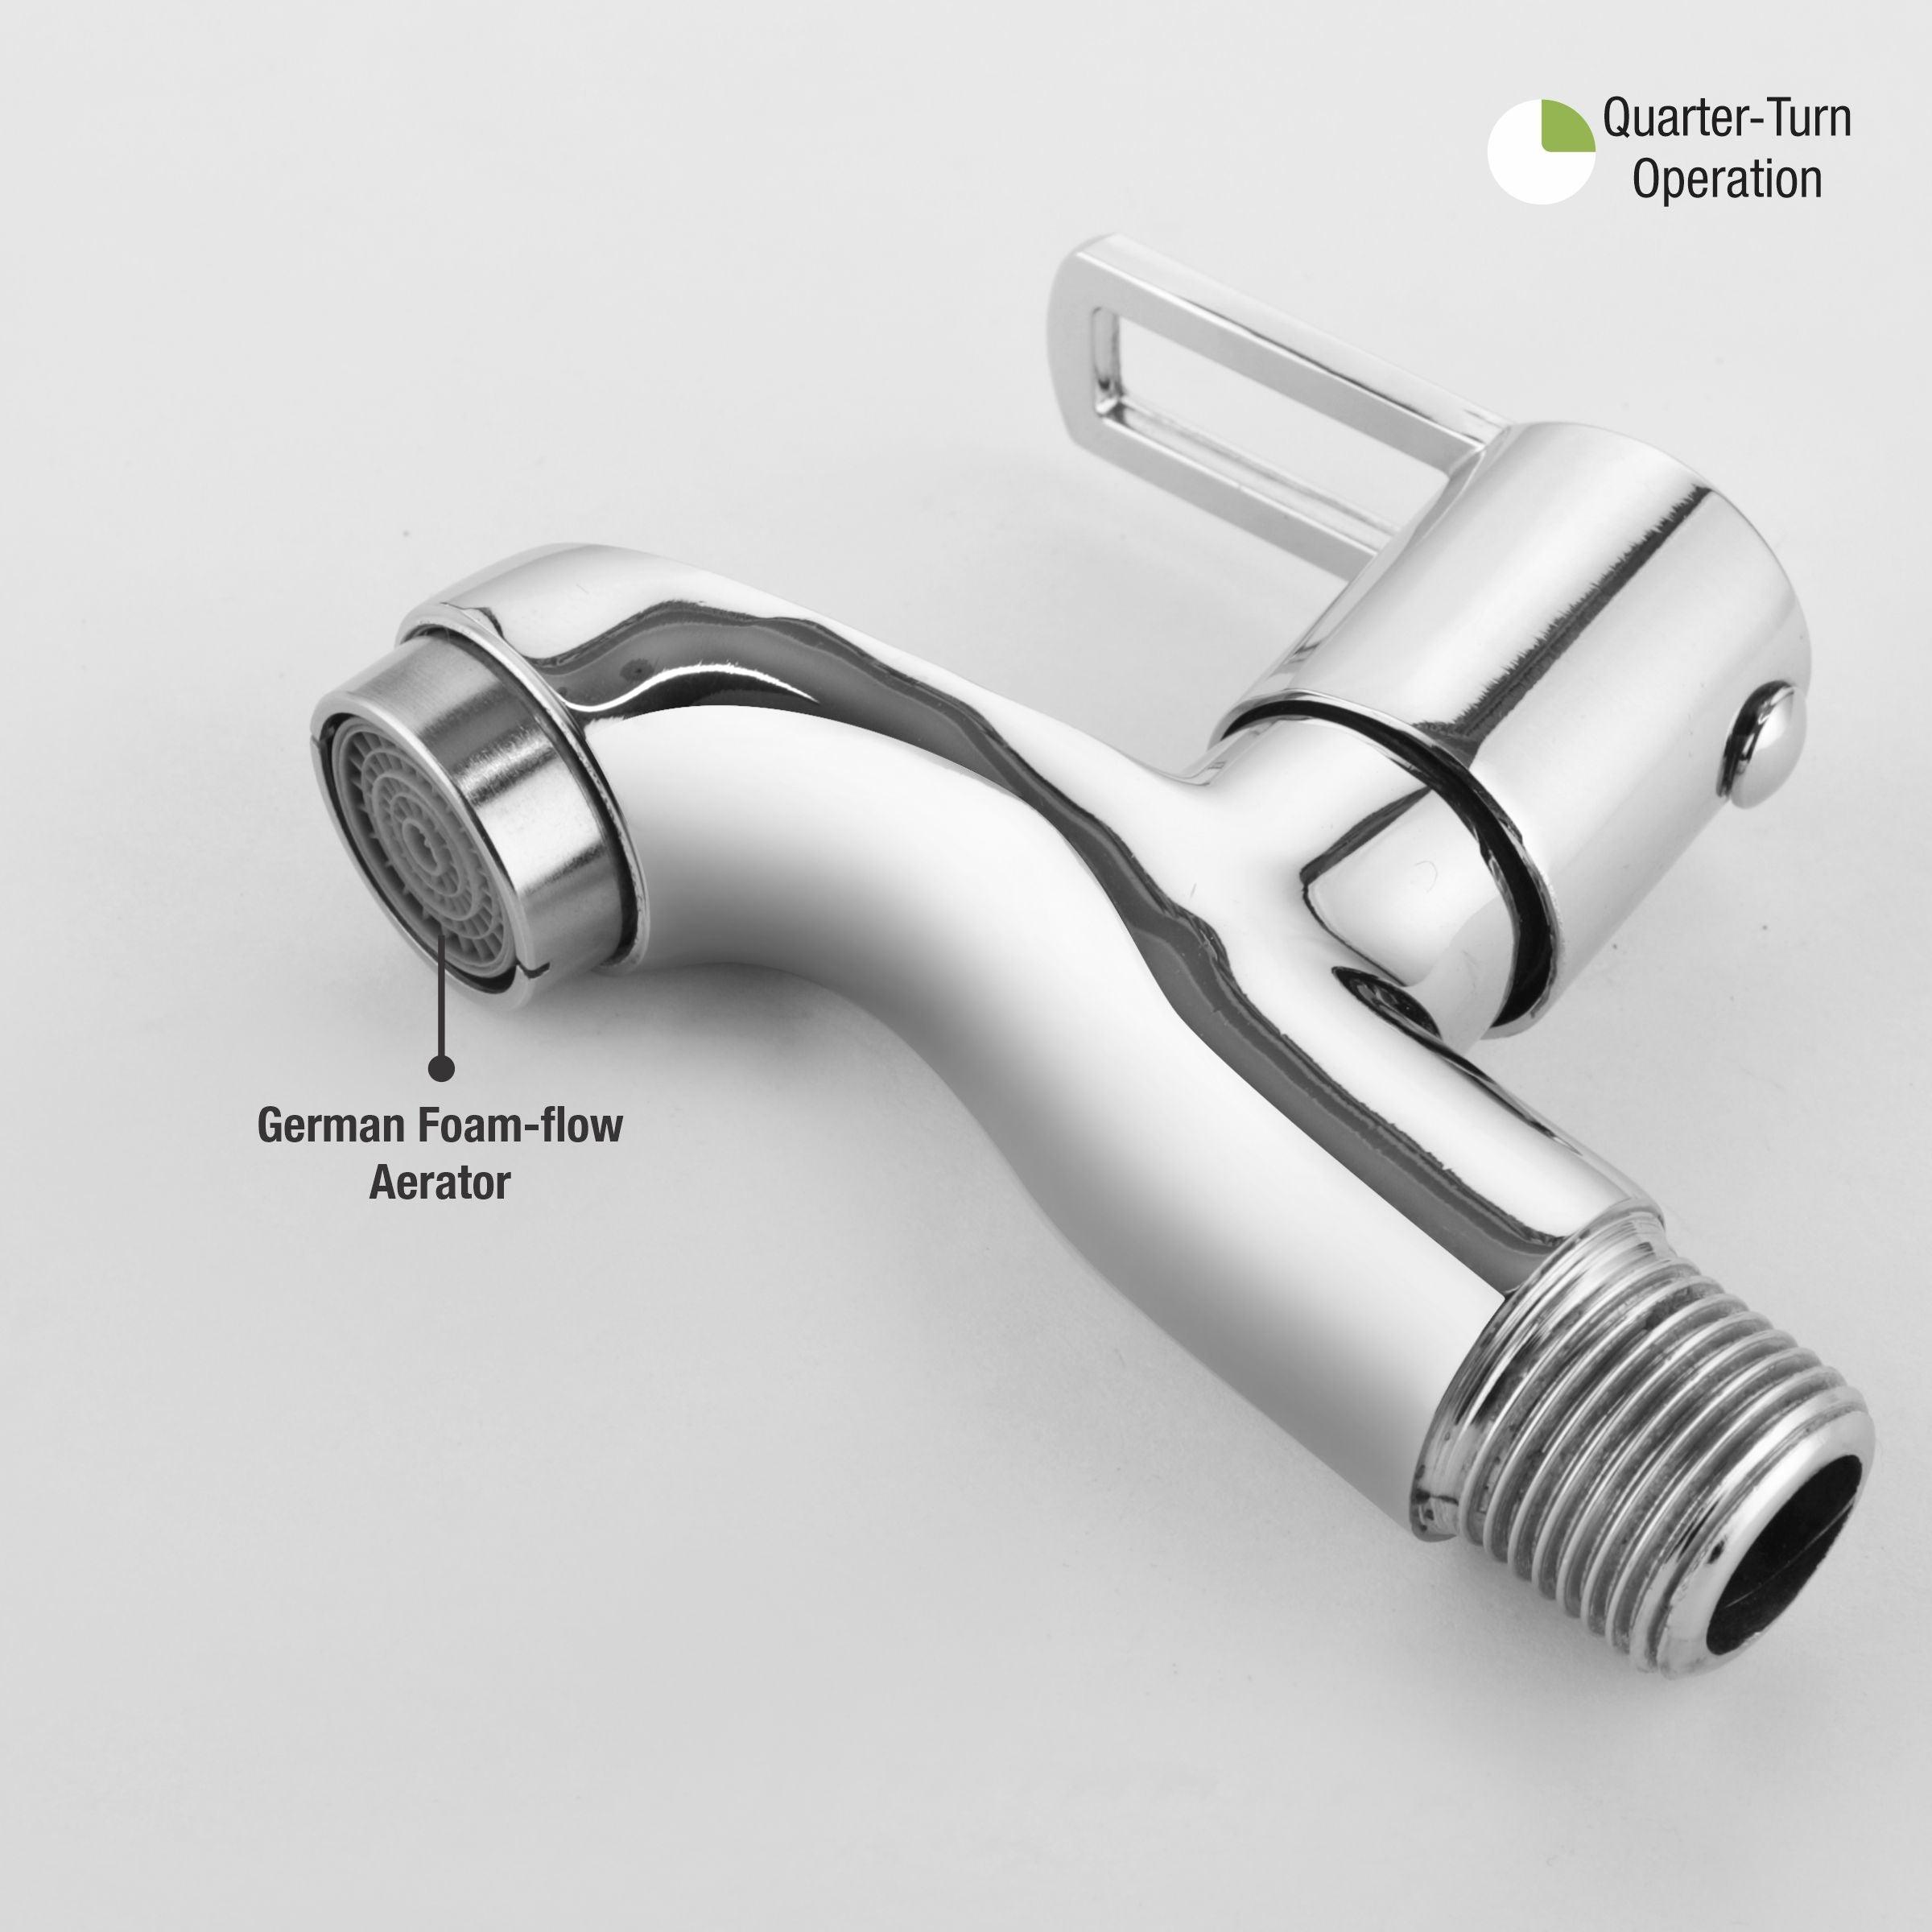 Kube Bib Tap Brass Faucet - LIPKA - Lipka Home